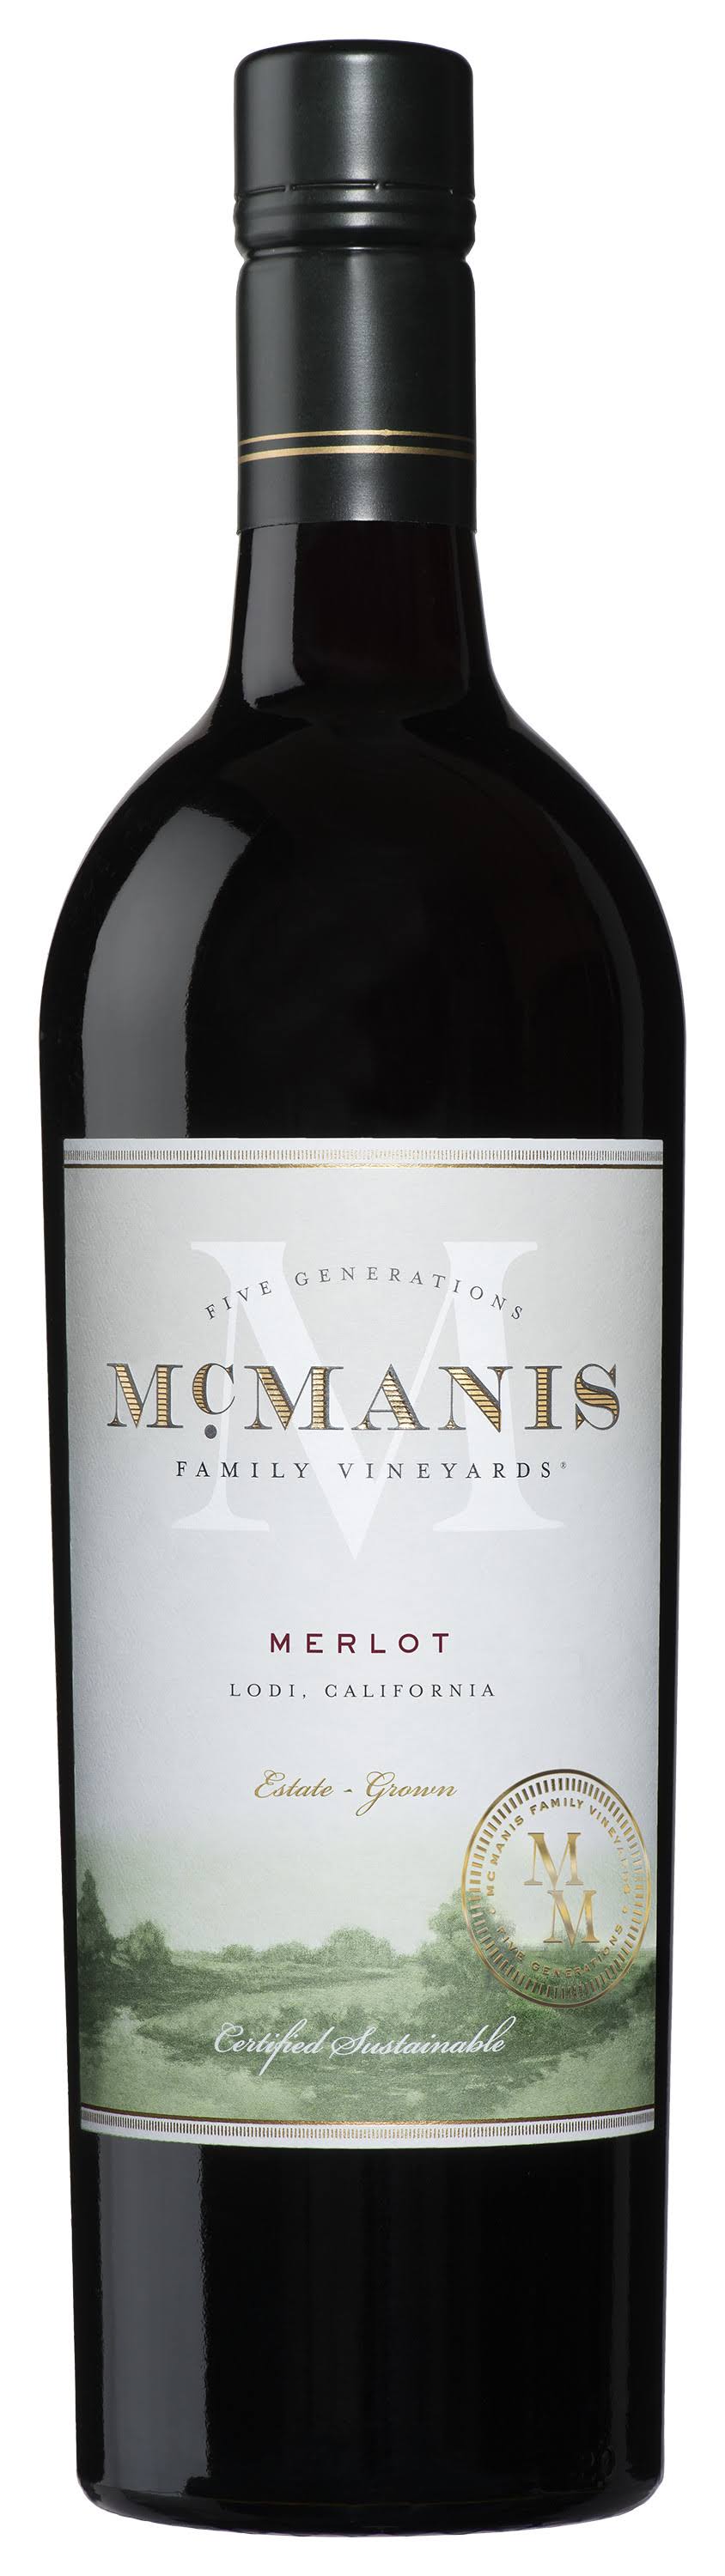 McManis Family Vineyards Merlot, California, 2006 - 750 ml